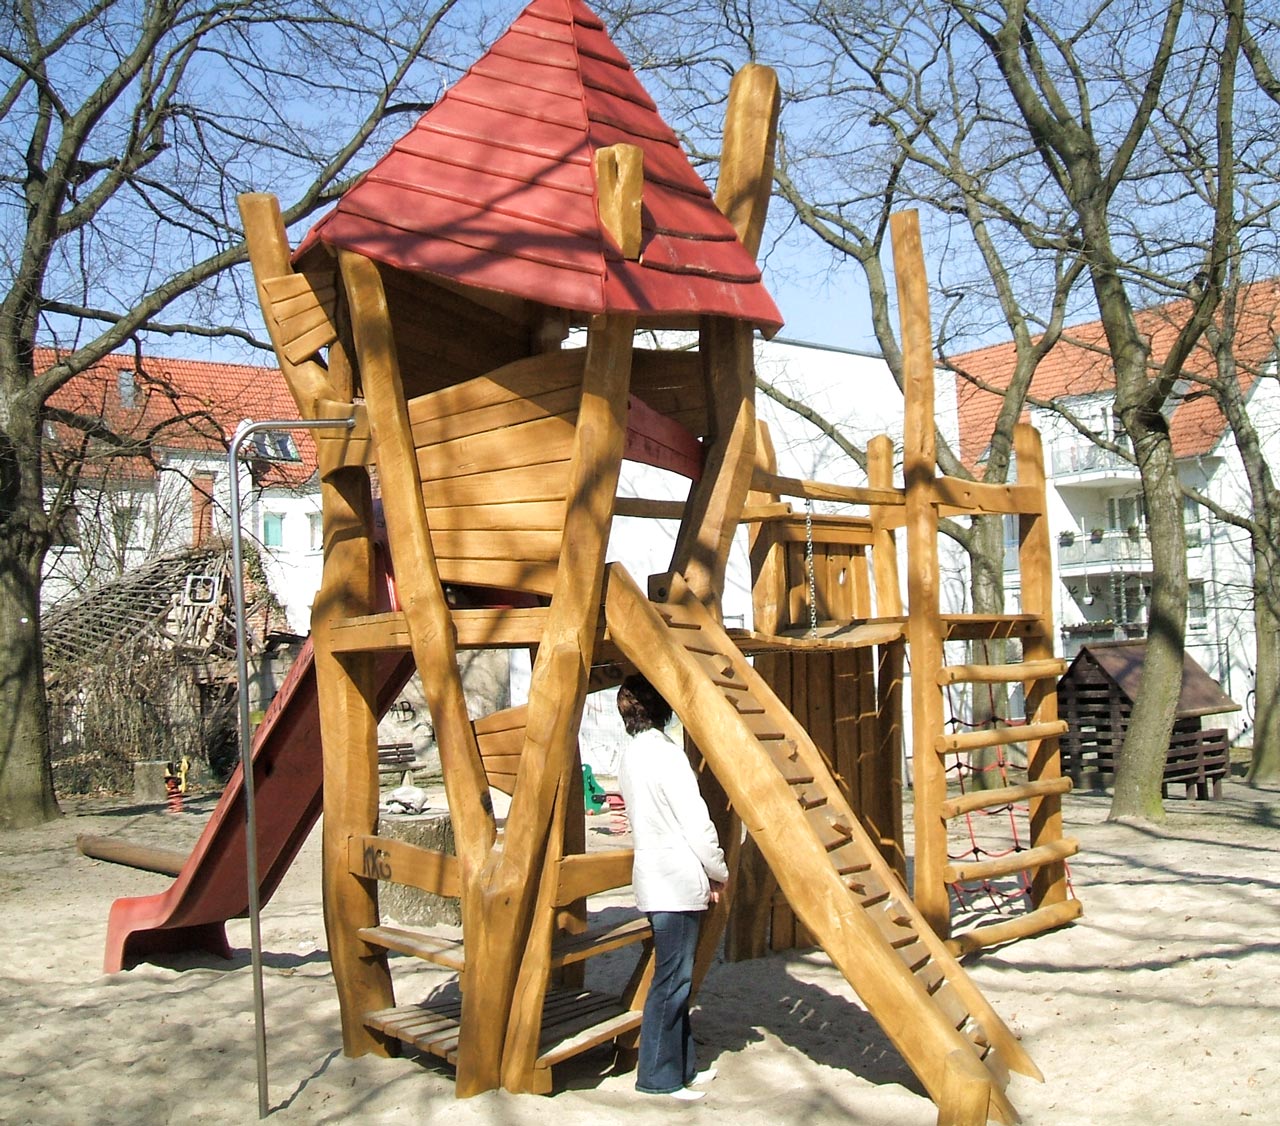 A 45 Spielplatz aus Holz